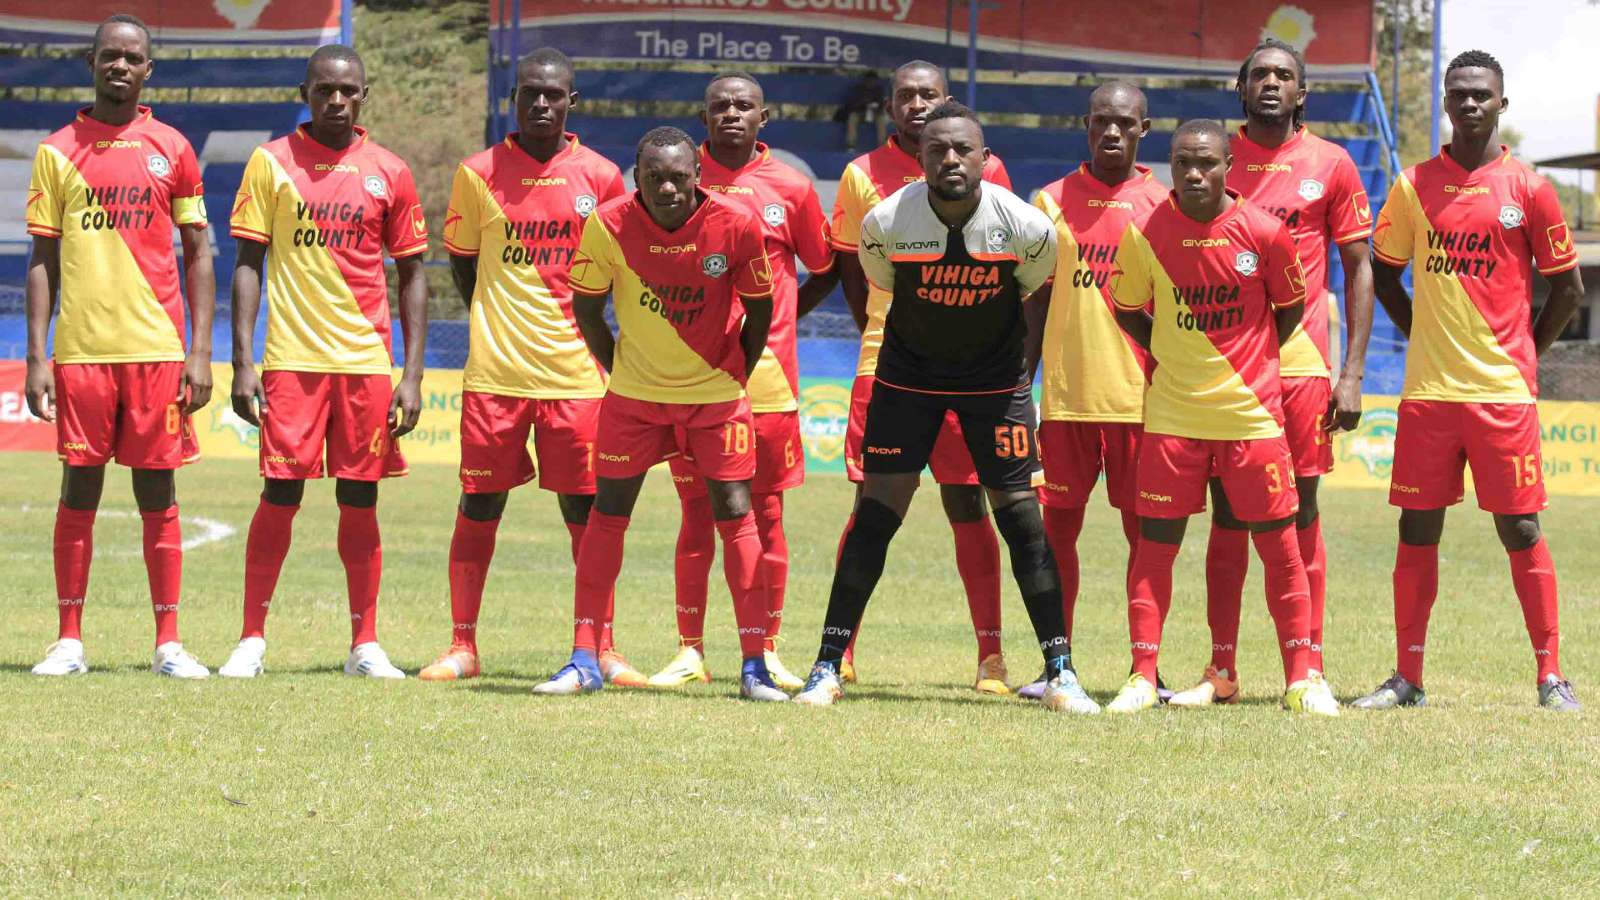 Vihiga United joins Mount Kenya United in the National Super League | FKF Premier League